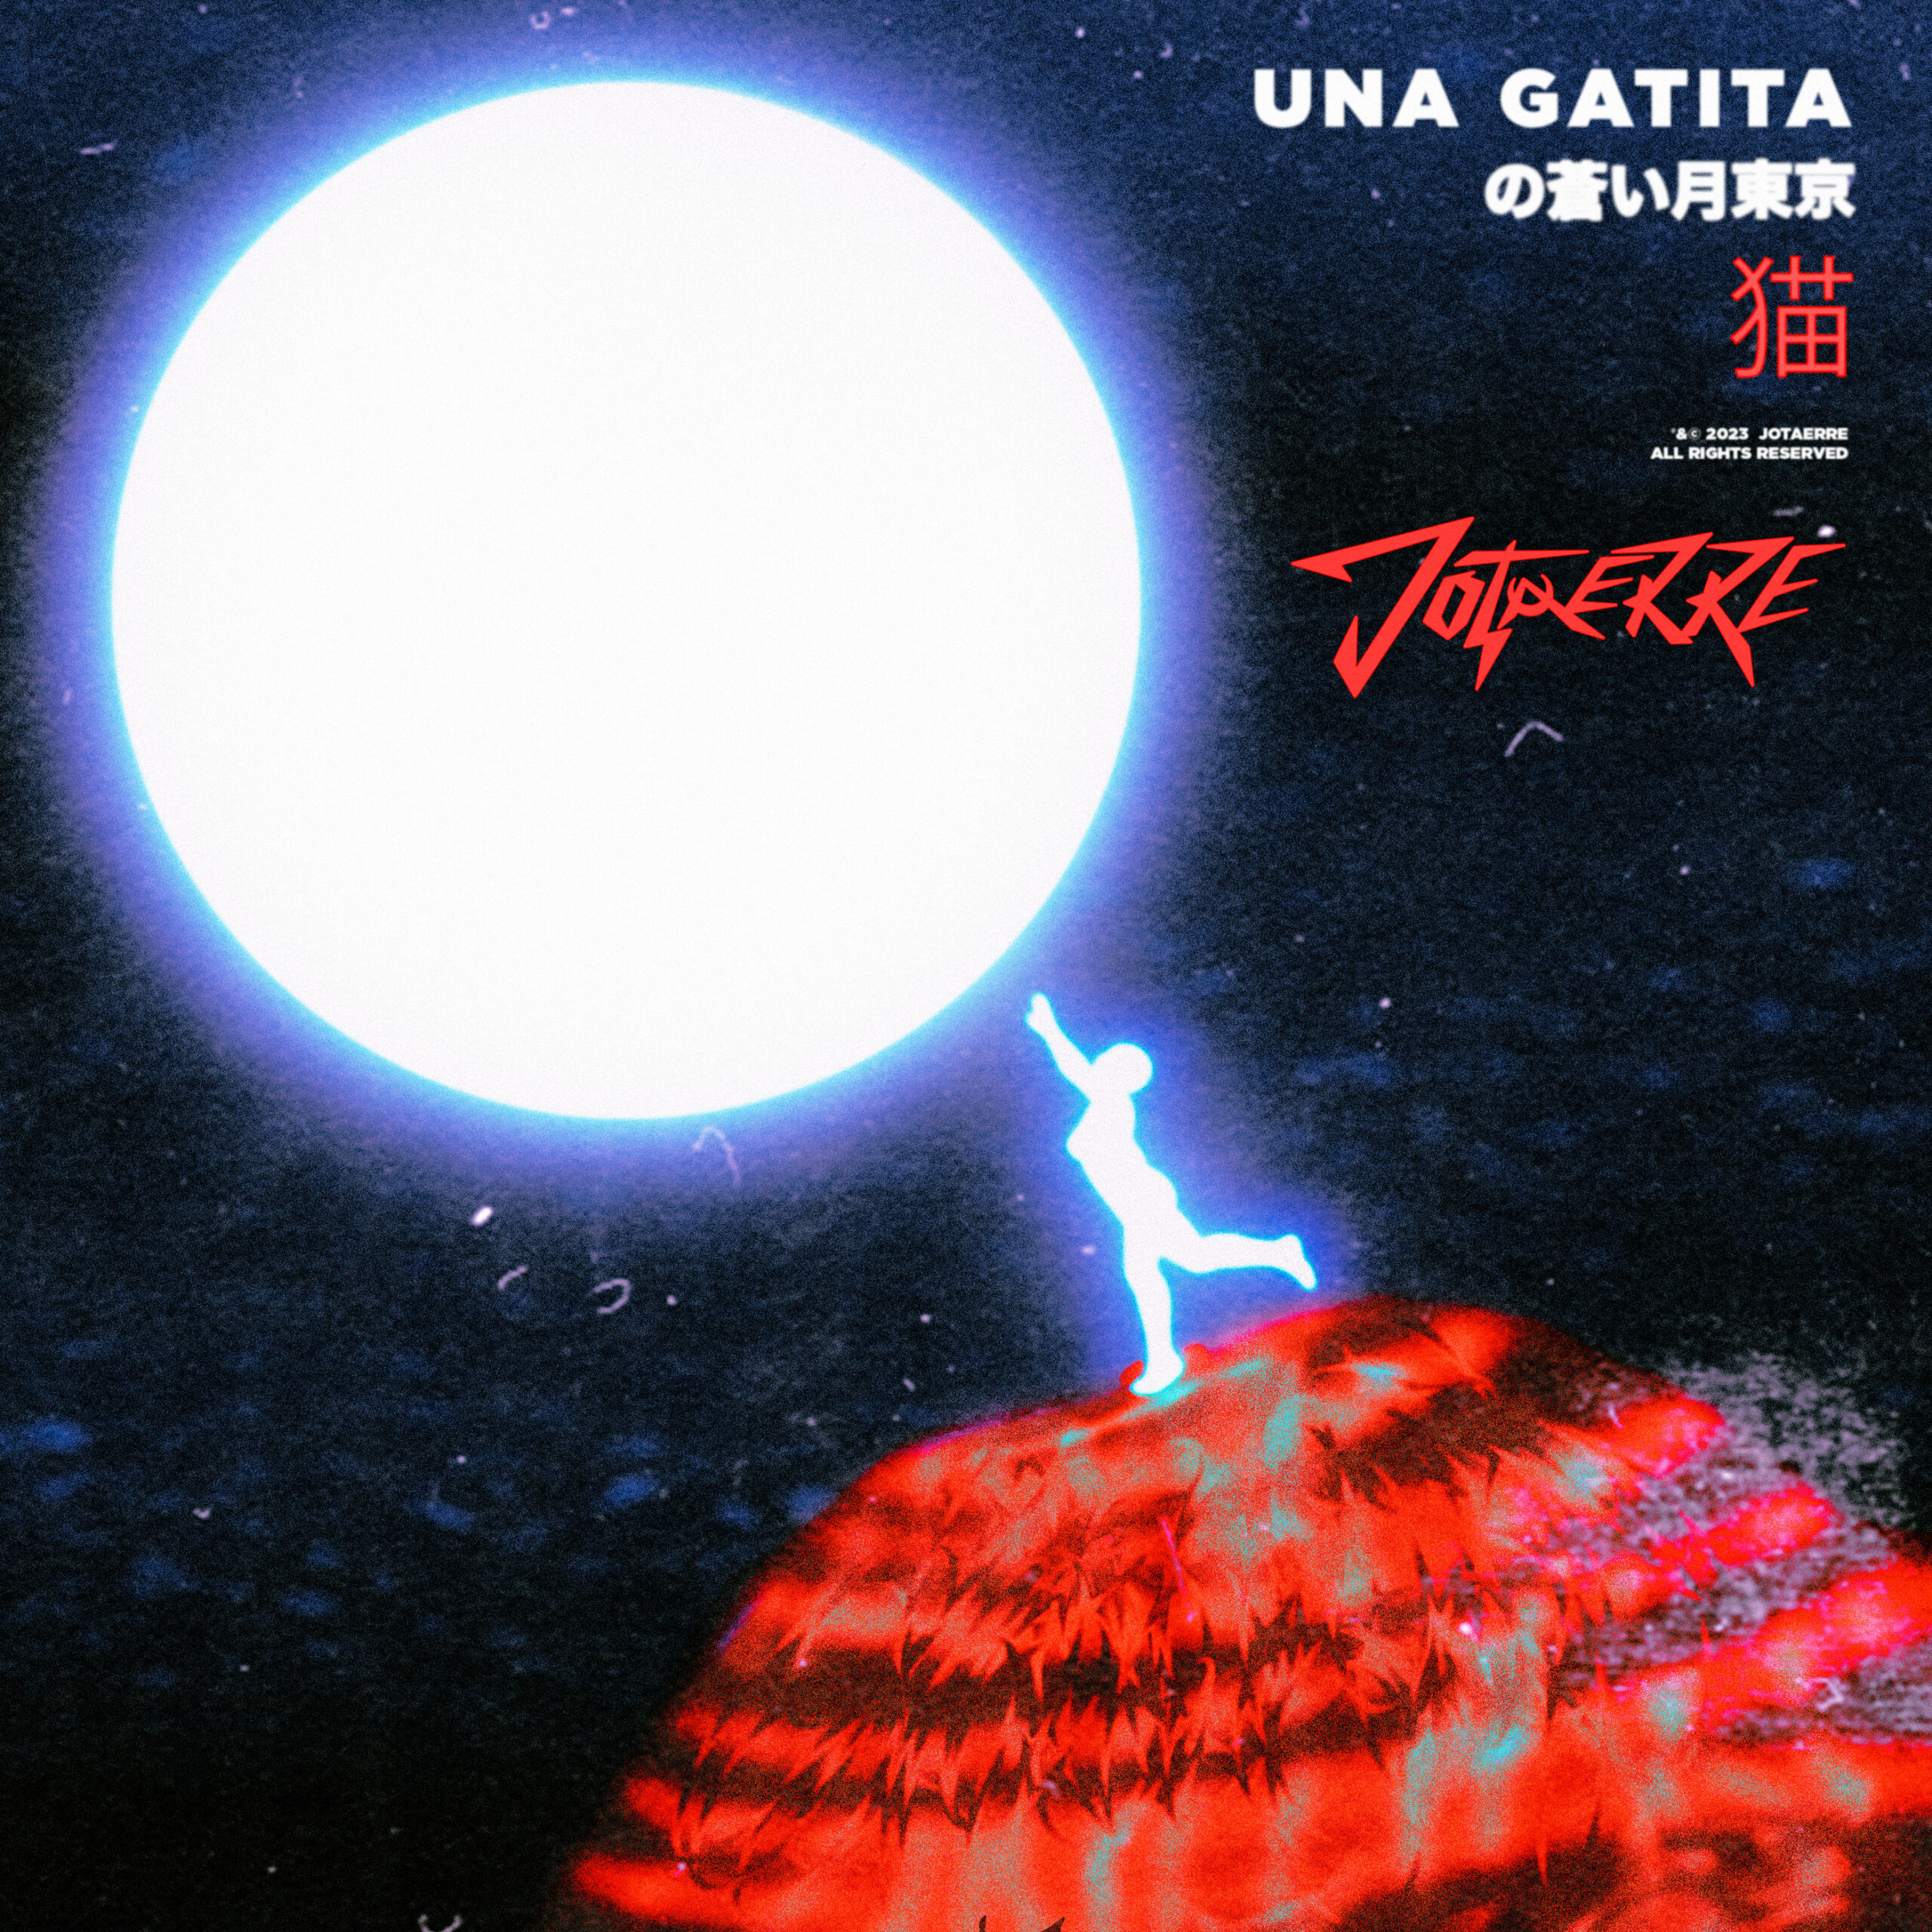 JOTAERRE presenta nuevo sencillo “Una Gatita”